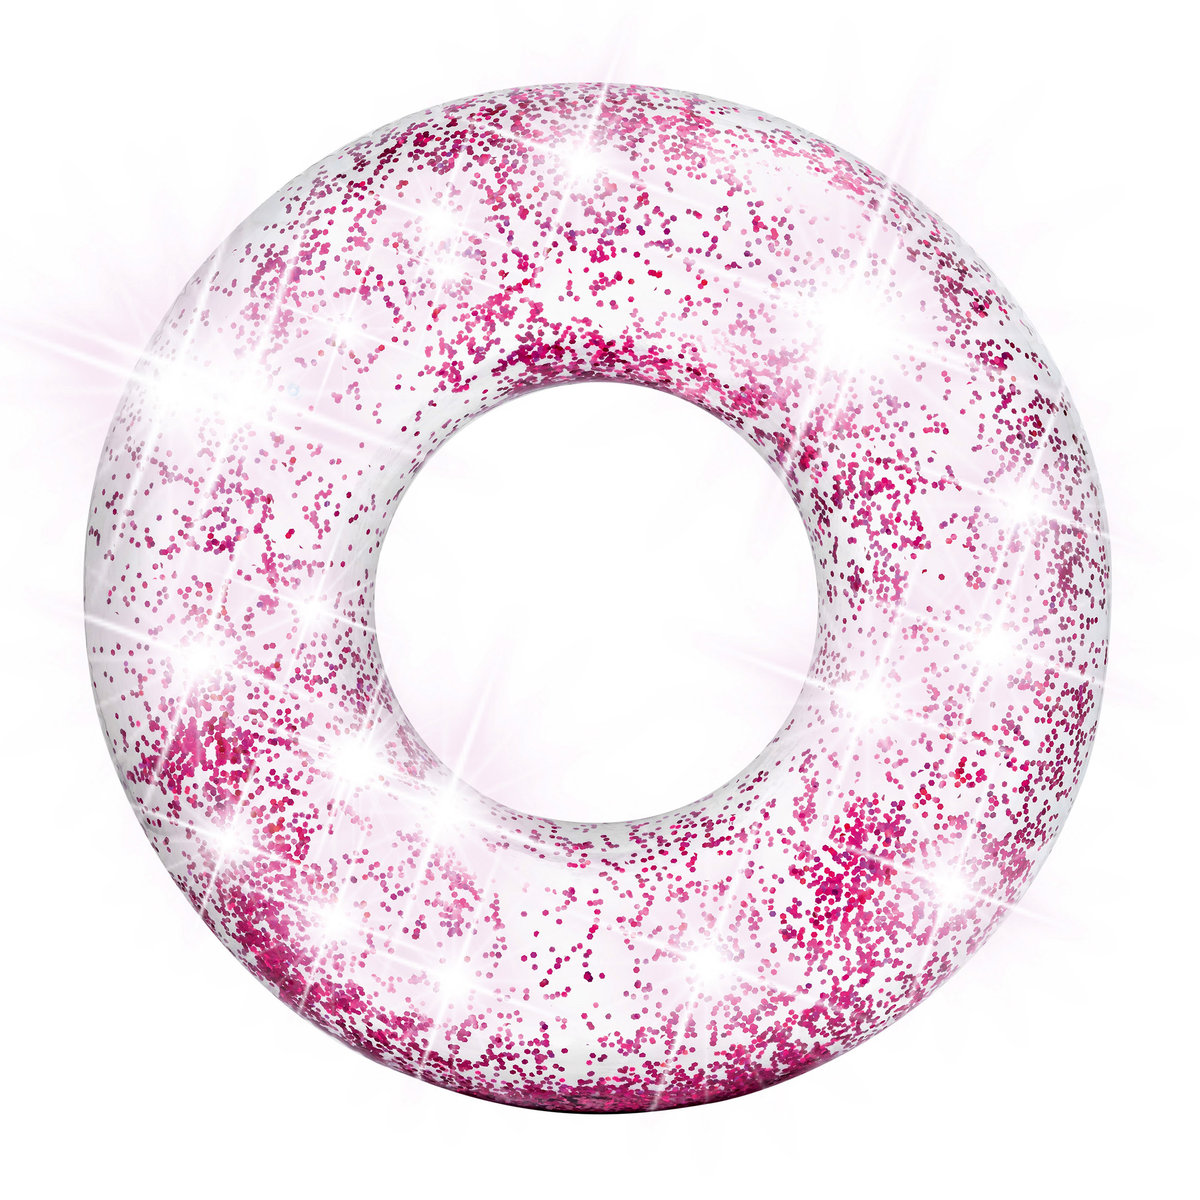 Фото - Іграшка для купання Intex , Koło dmuchane różowe brokatowe do pływania, 107 cm 